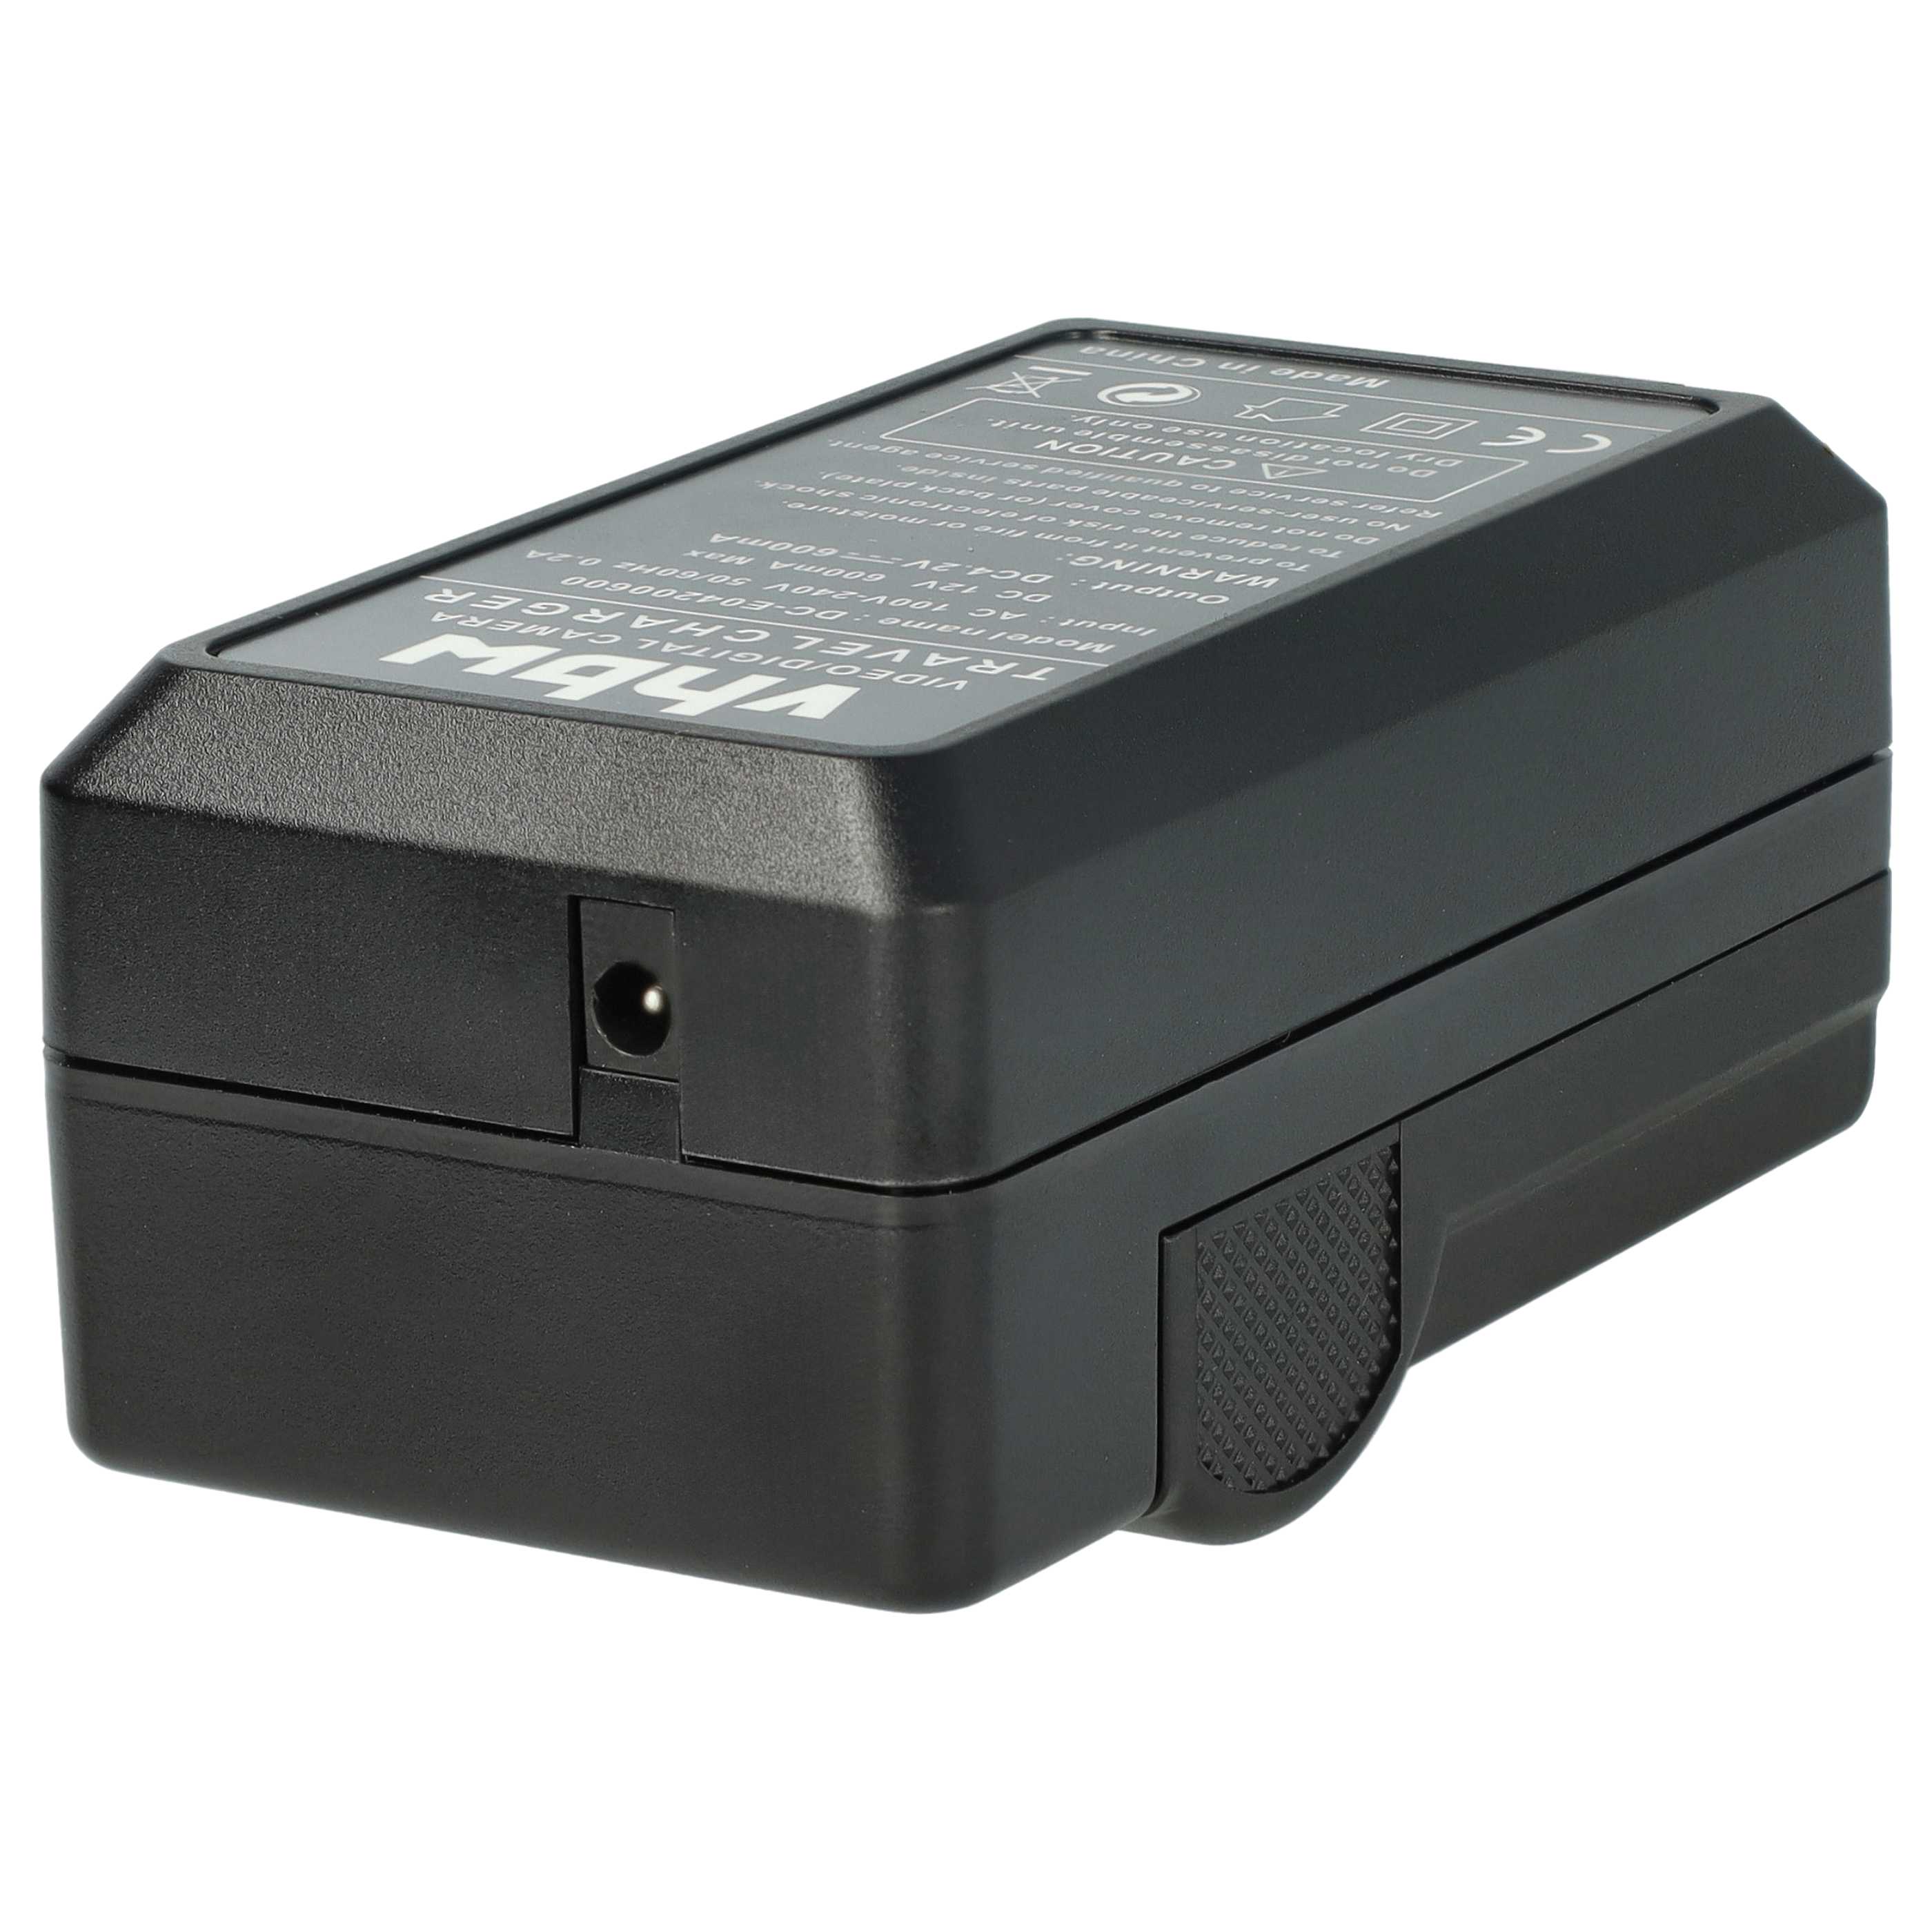 Ładowarka do aparatu Canon BP-709 i innych zamiennik Canon CG-700 - ładowarka akumulatora 0,6 A, 4,2 V